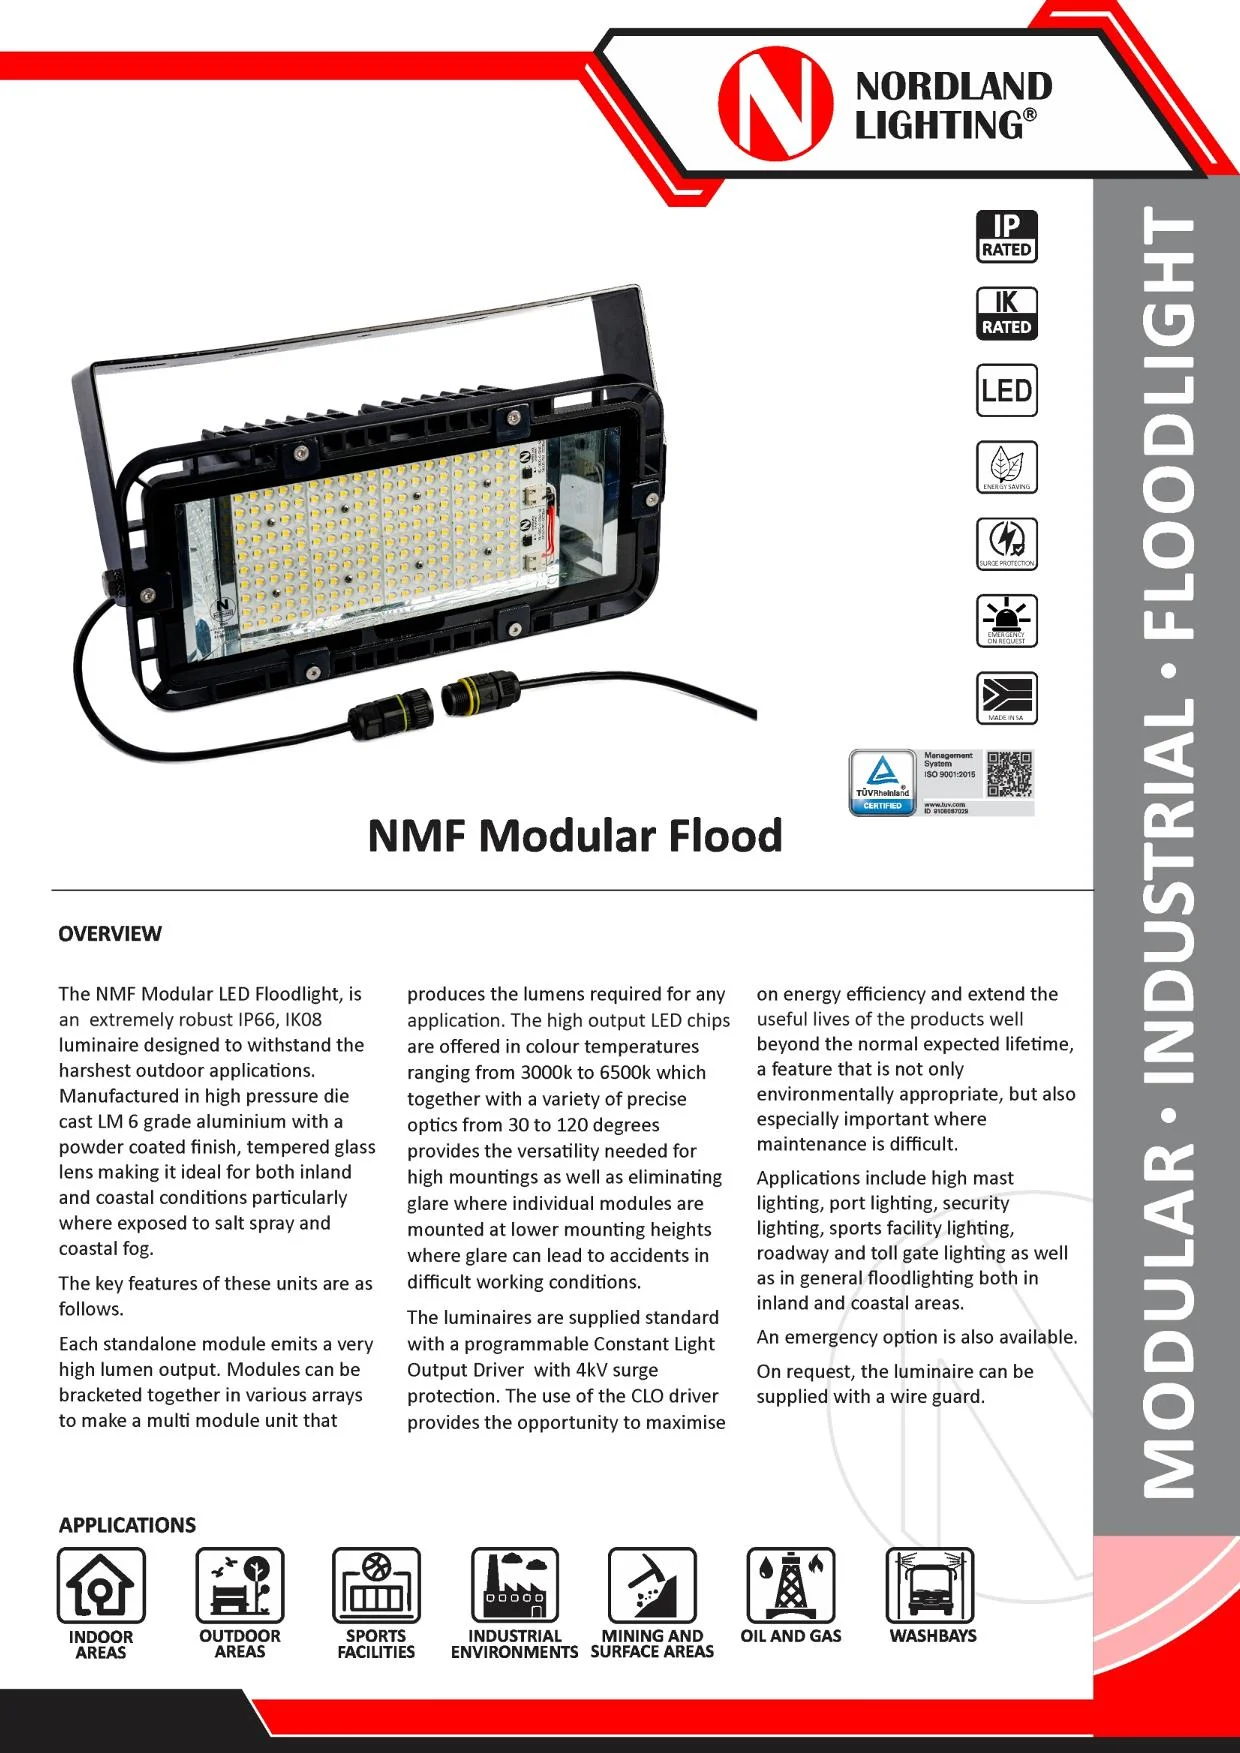 NL53 Nordland NMF Modular Flood